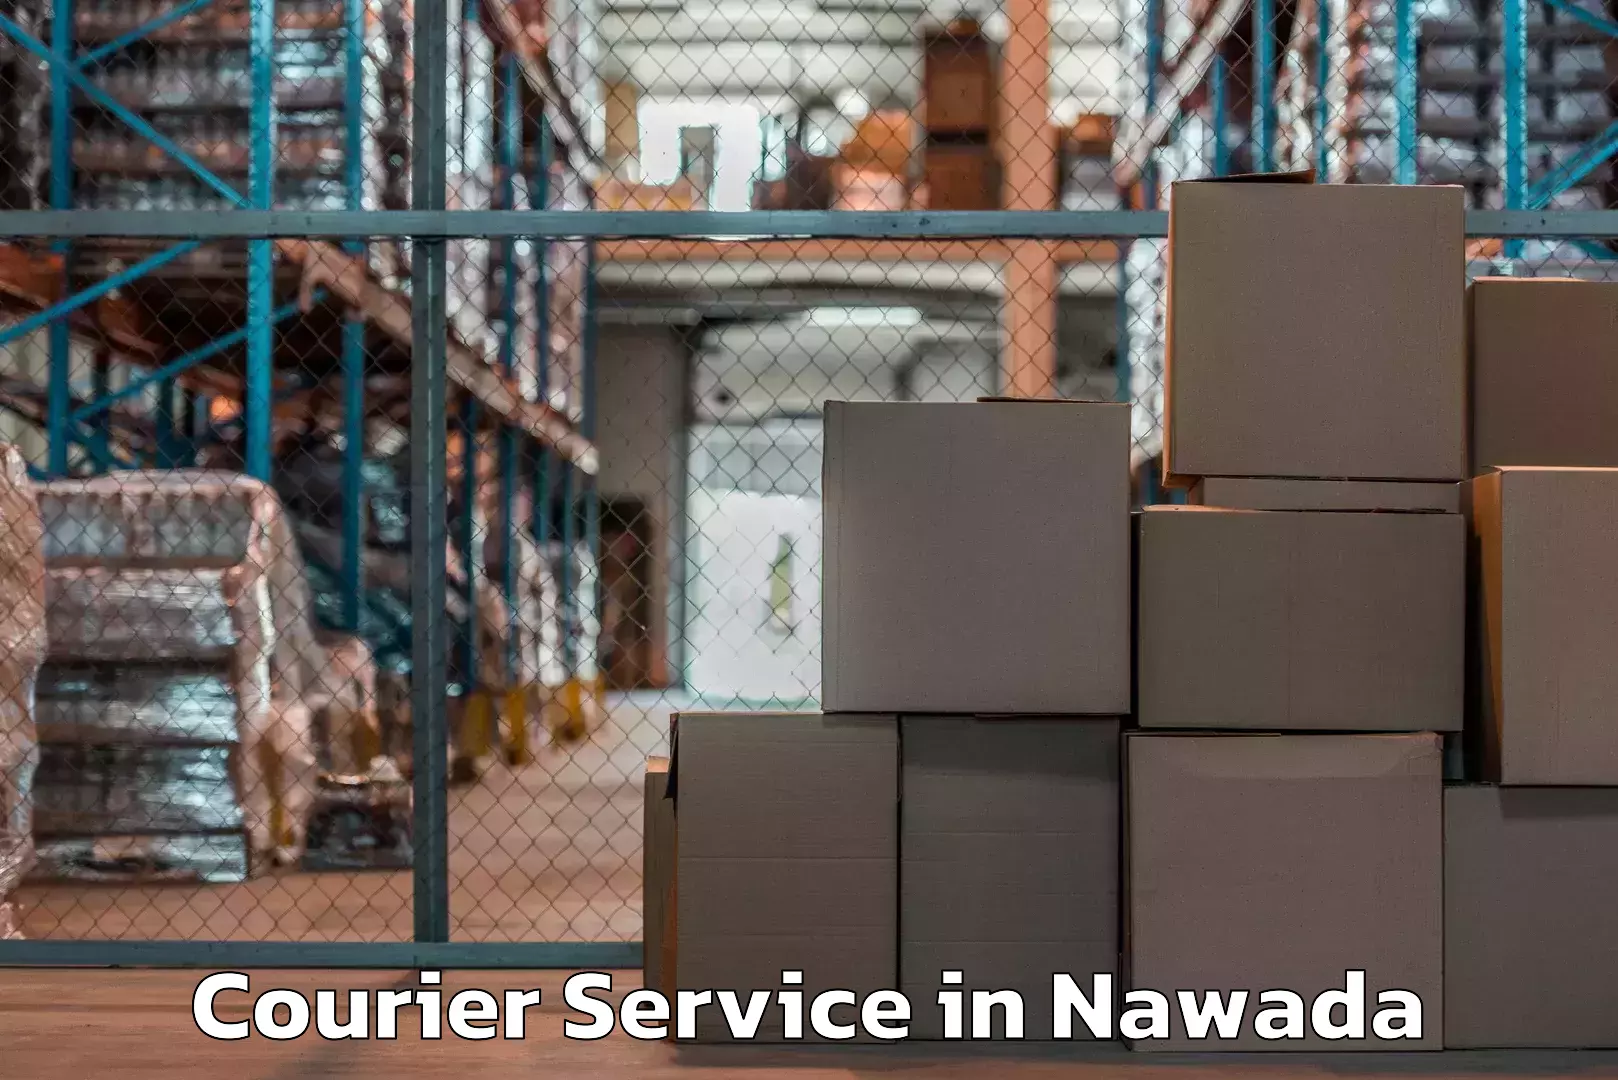 Efficient order fulfillment in Nawada